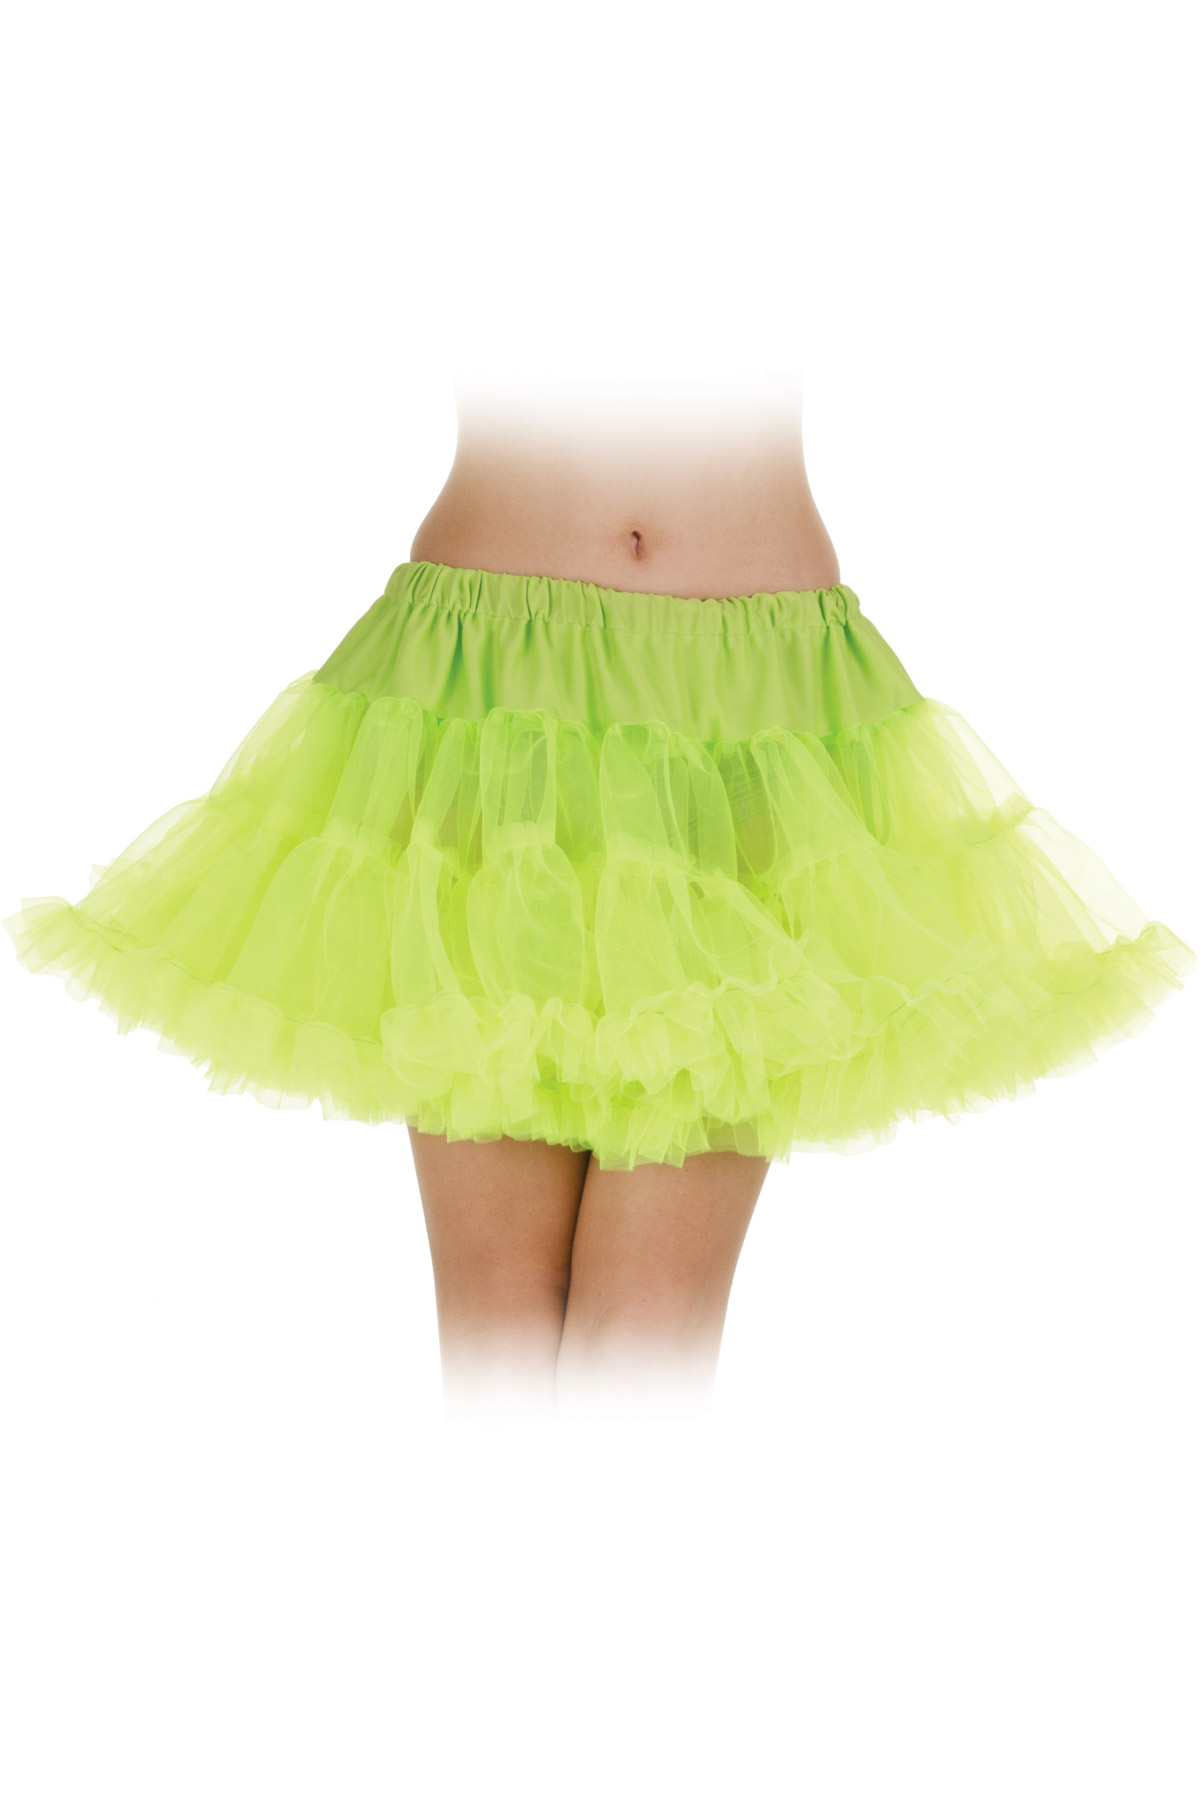 Cute Neon Green Two Layer Tutu Skirt Dancer Costume Skirt Accessory ...